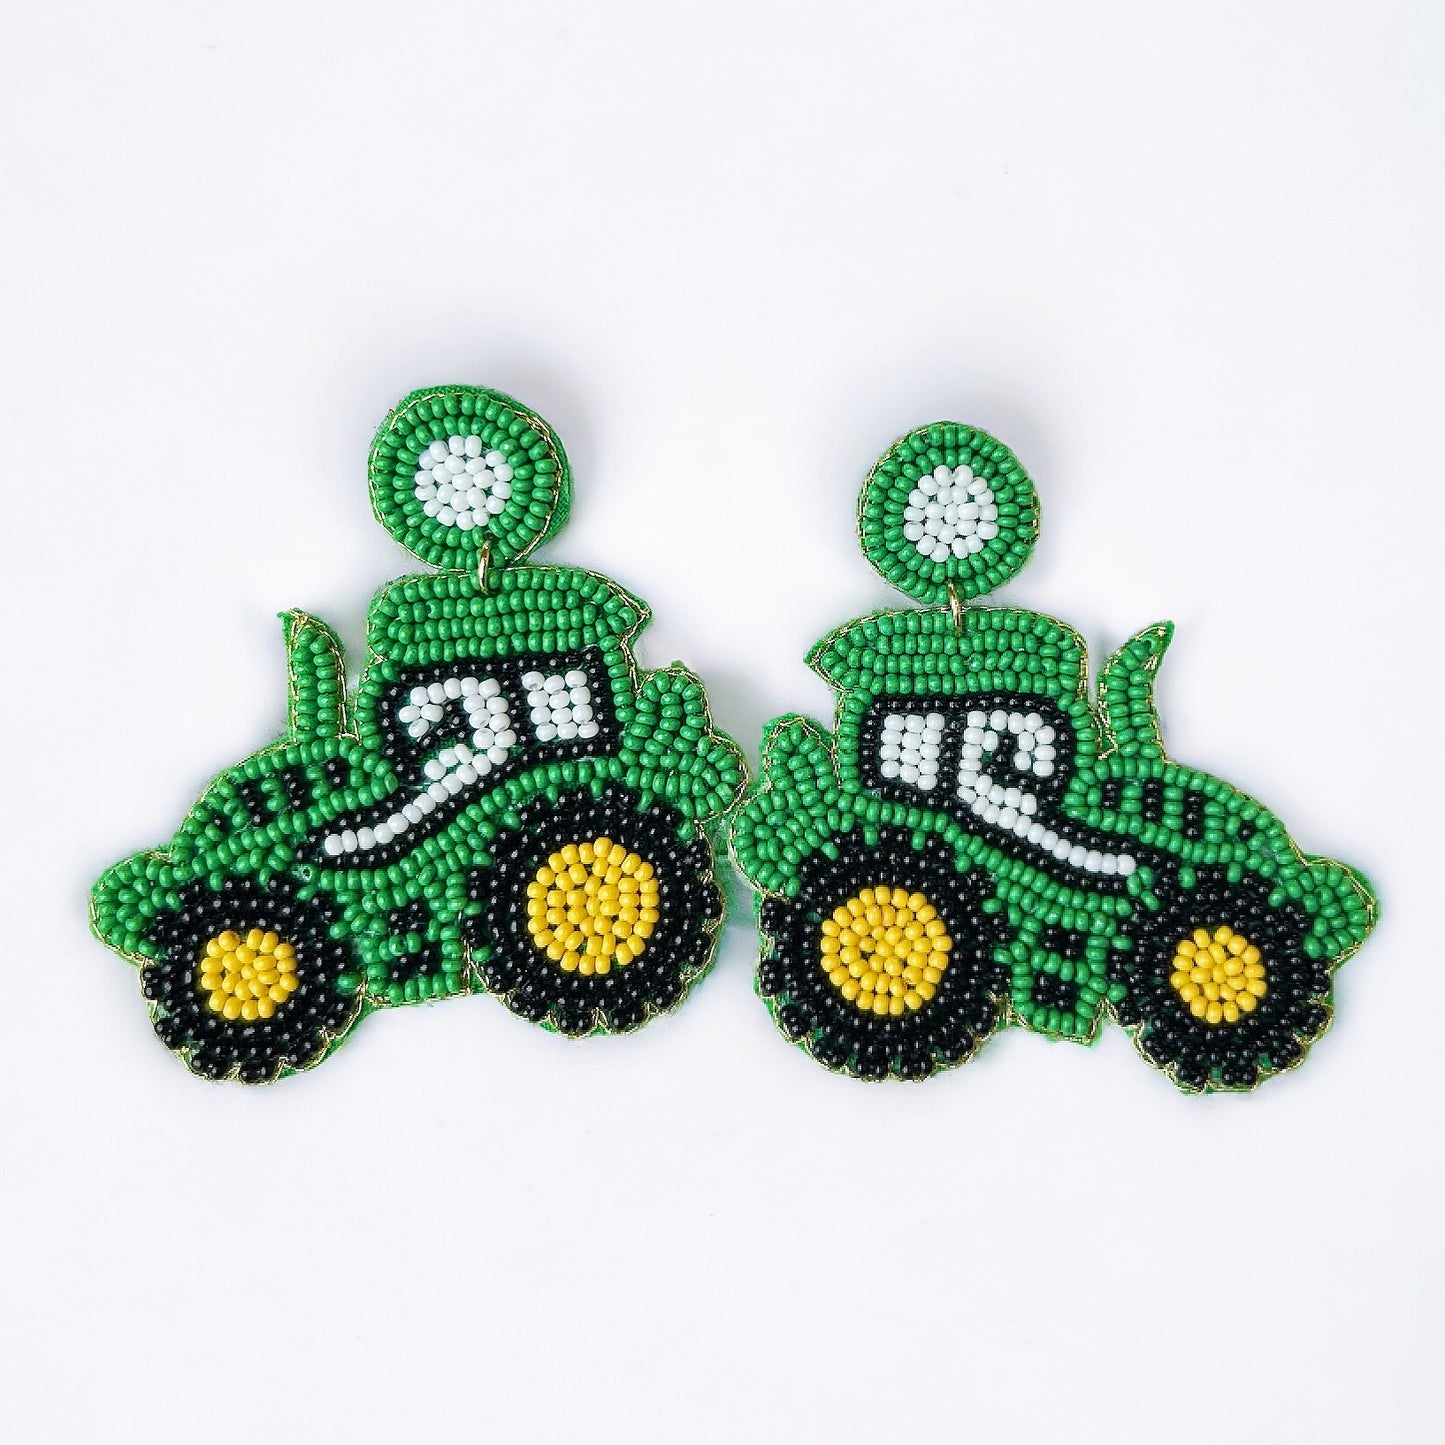 Beaded Big Green Tractor Earrings~SALE